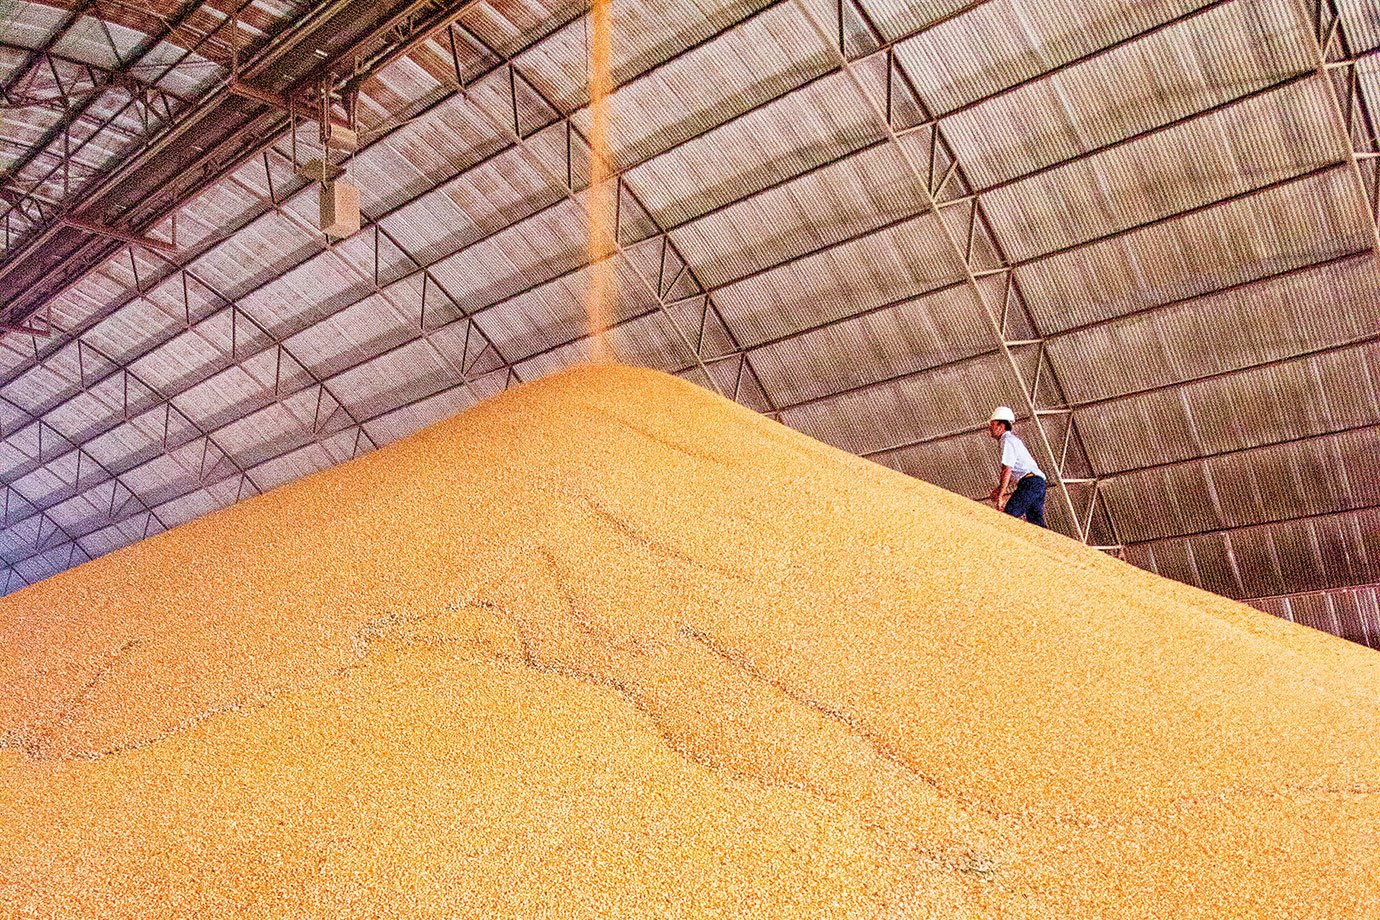 Galeria de fotos de As 6 principais commodities agrícolas que o Brasil exporta